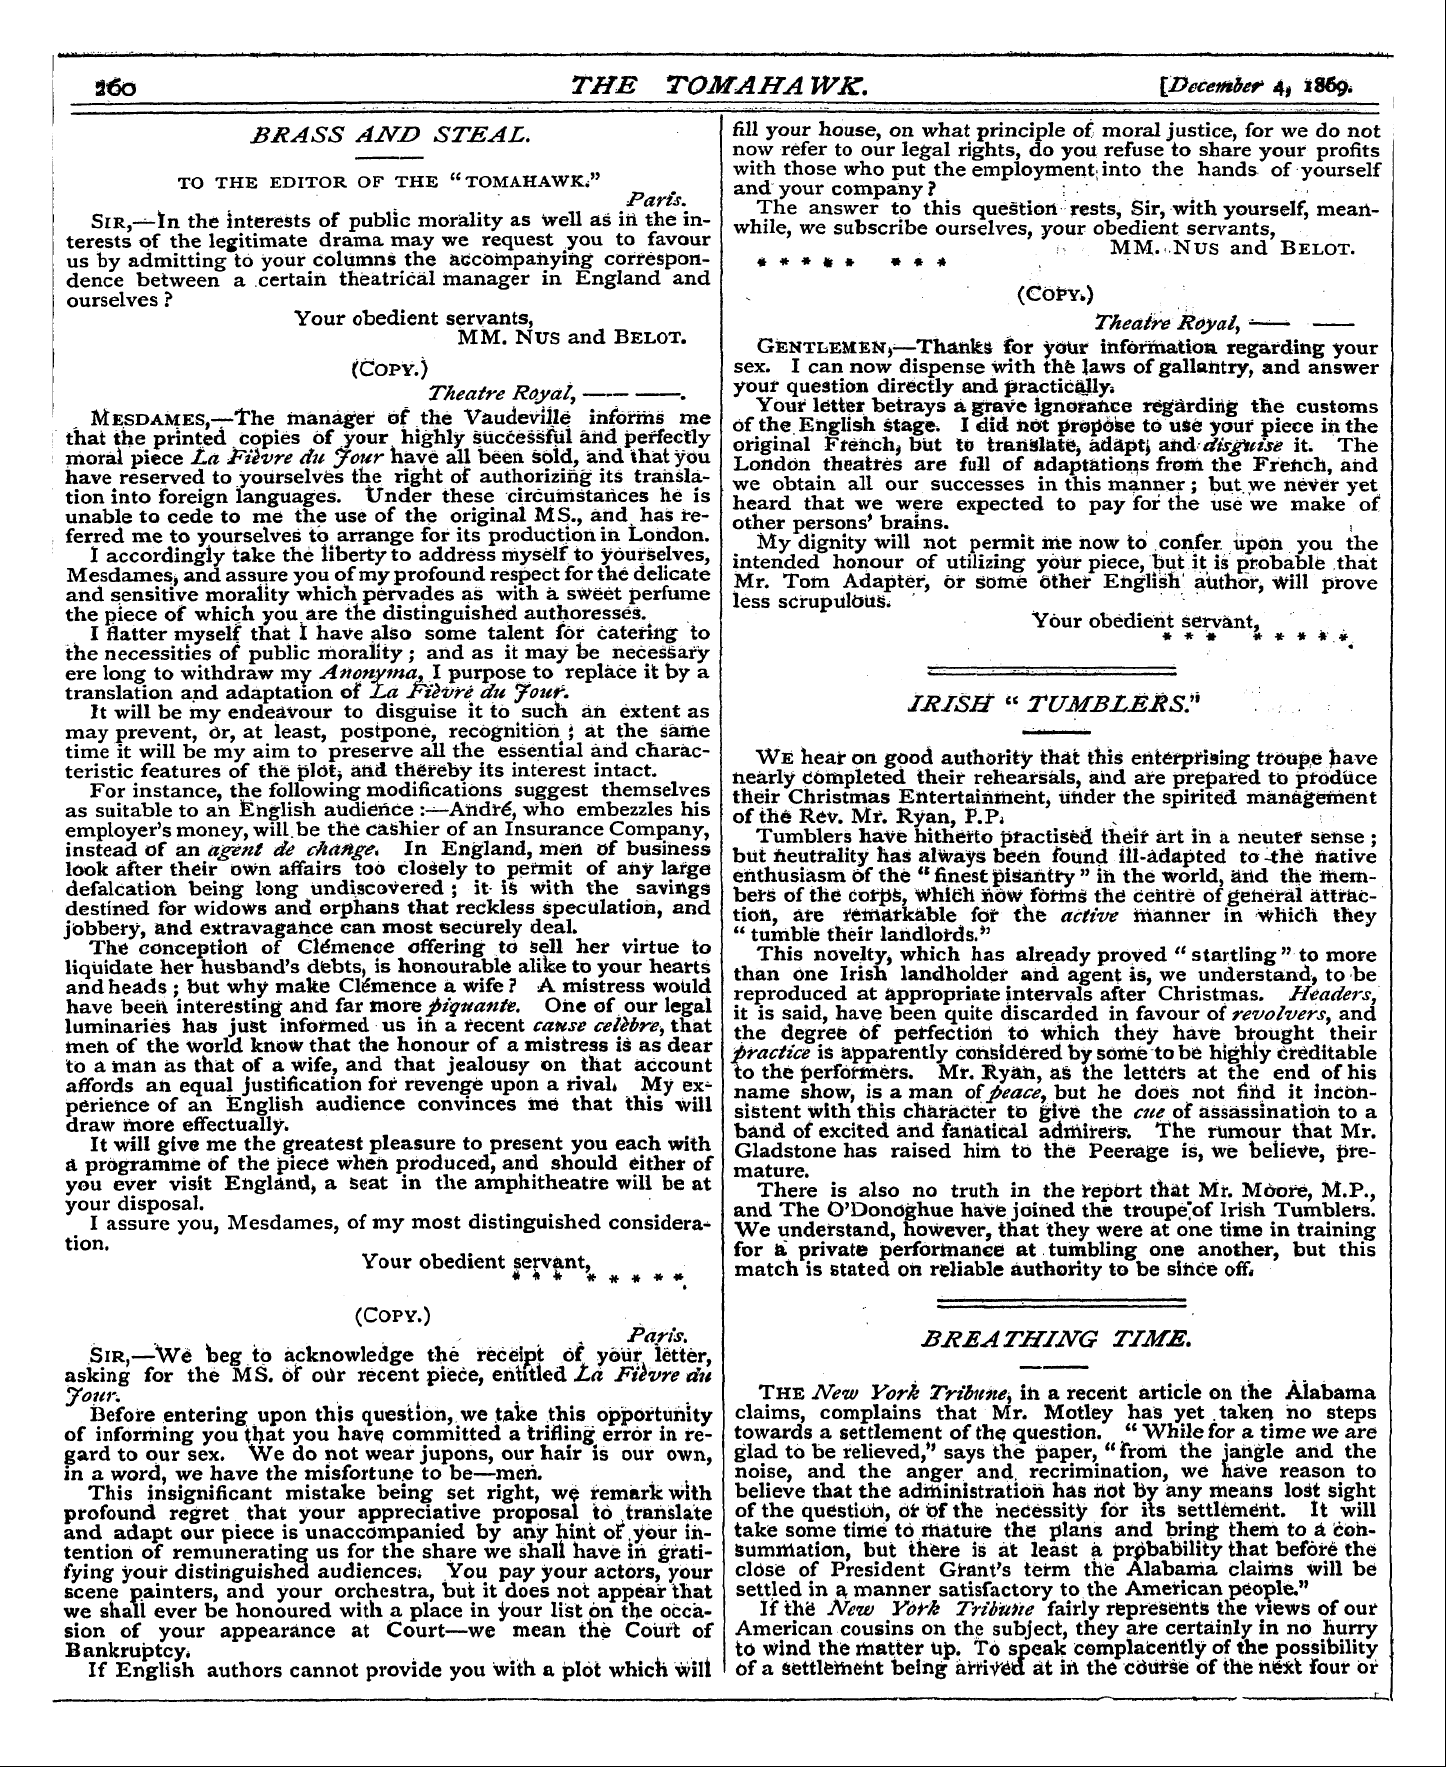 Tomahawk (1867-1870): jS F Y, 1st edition - Brass Amd Steal.